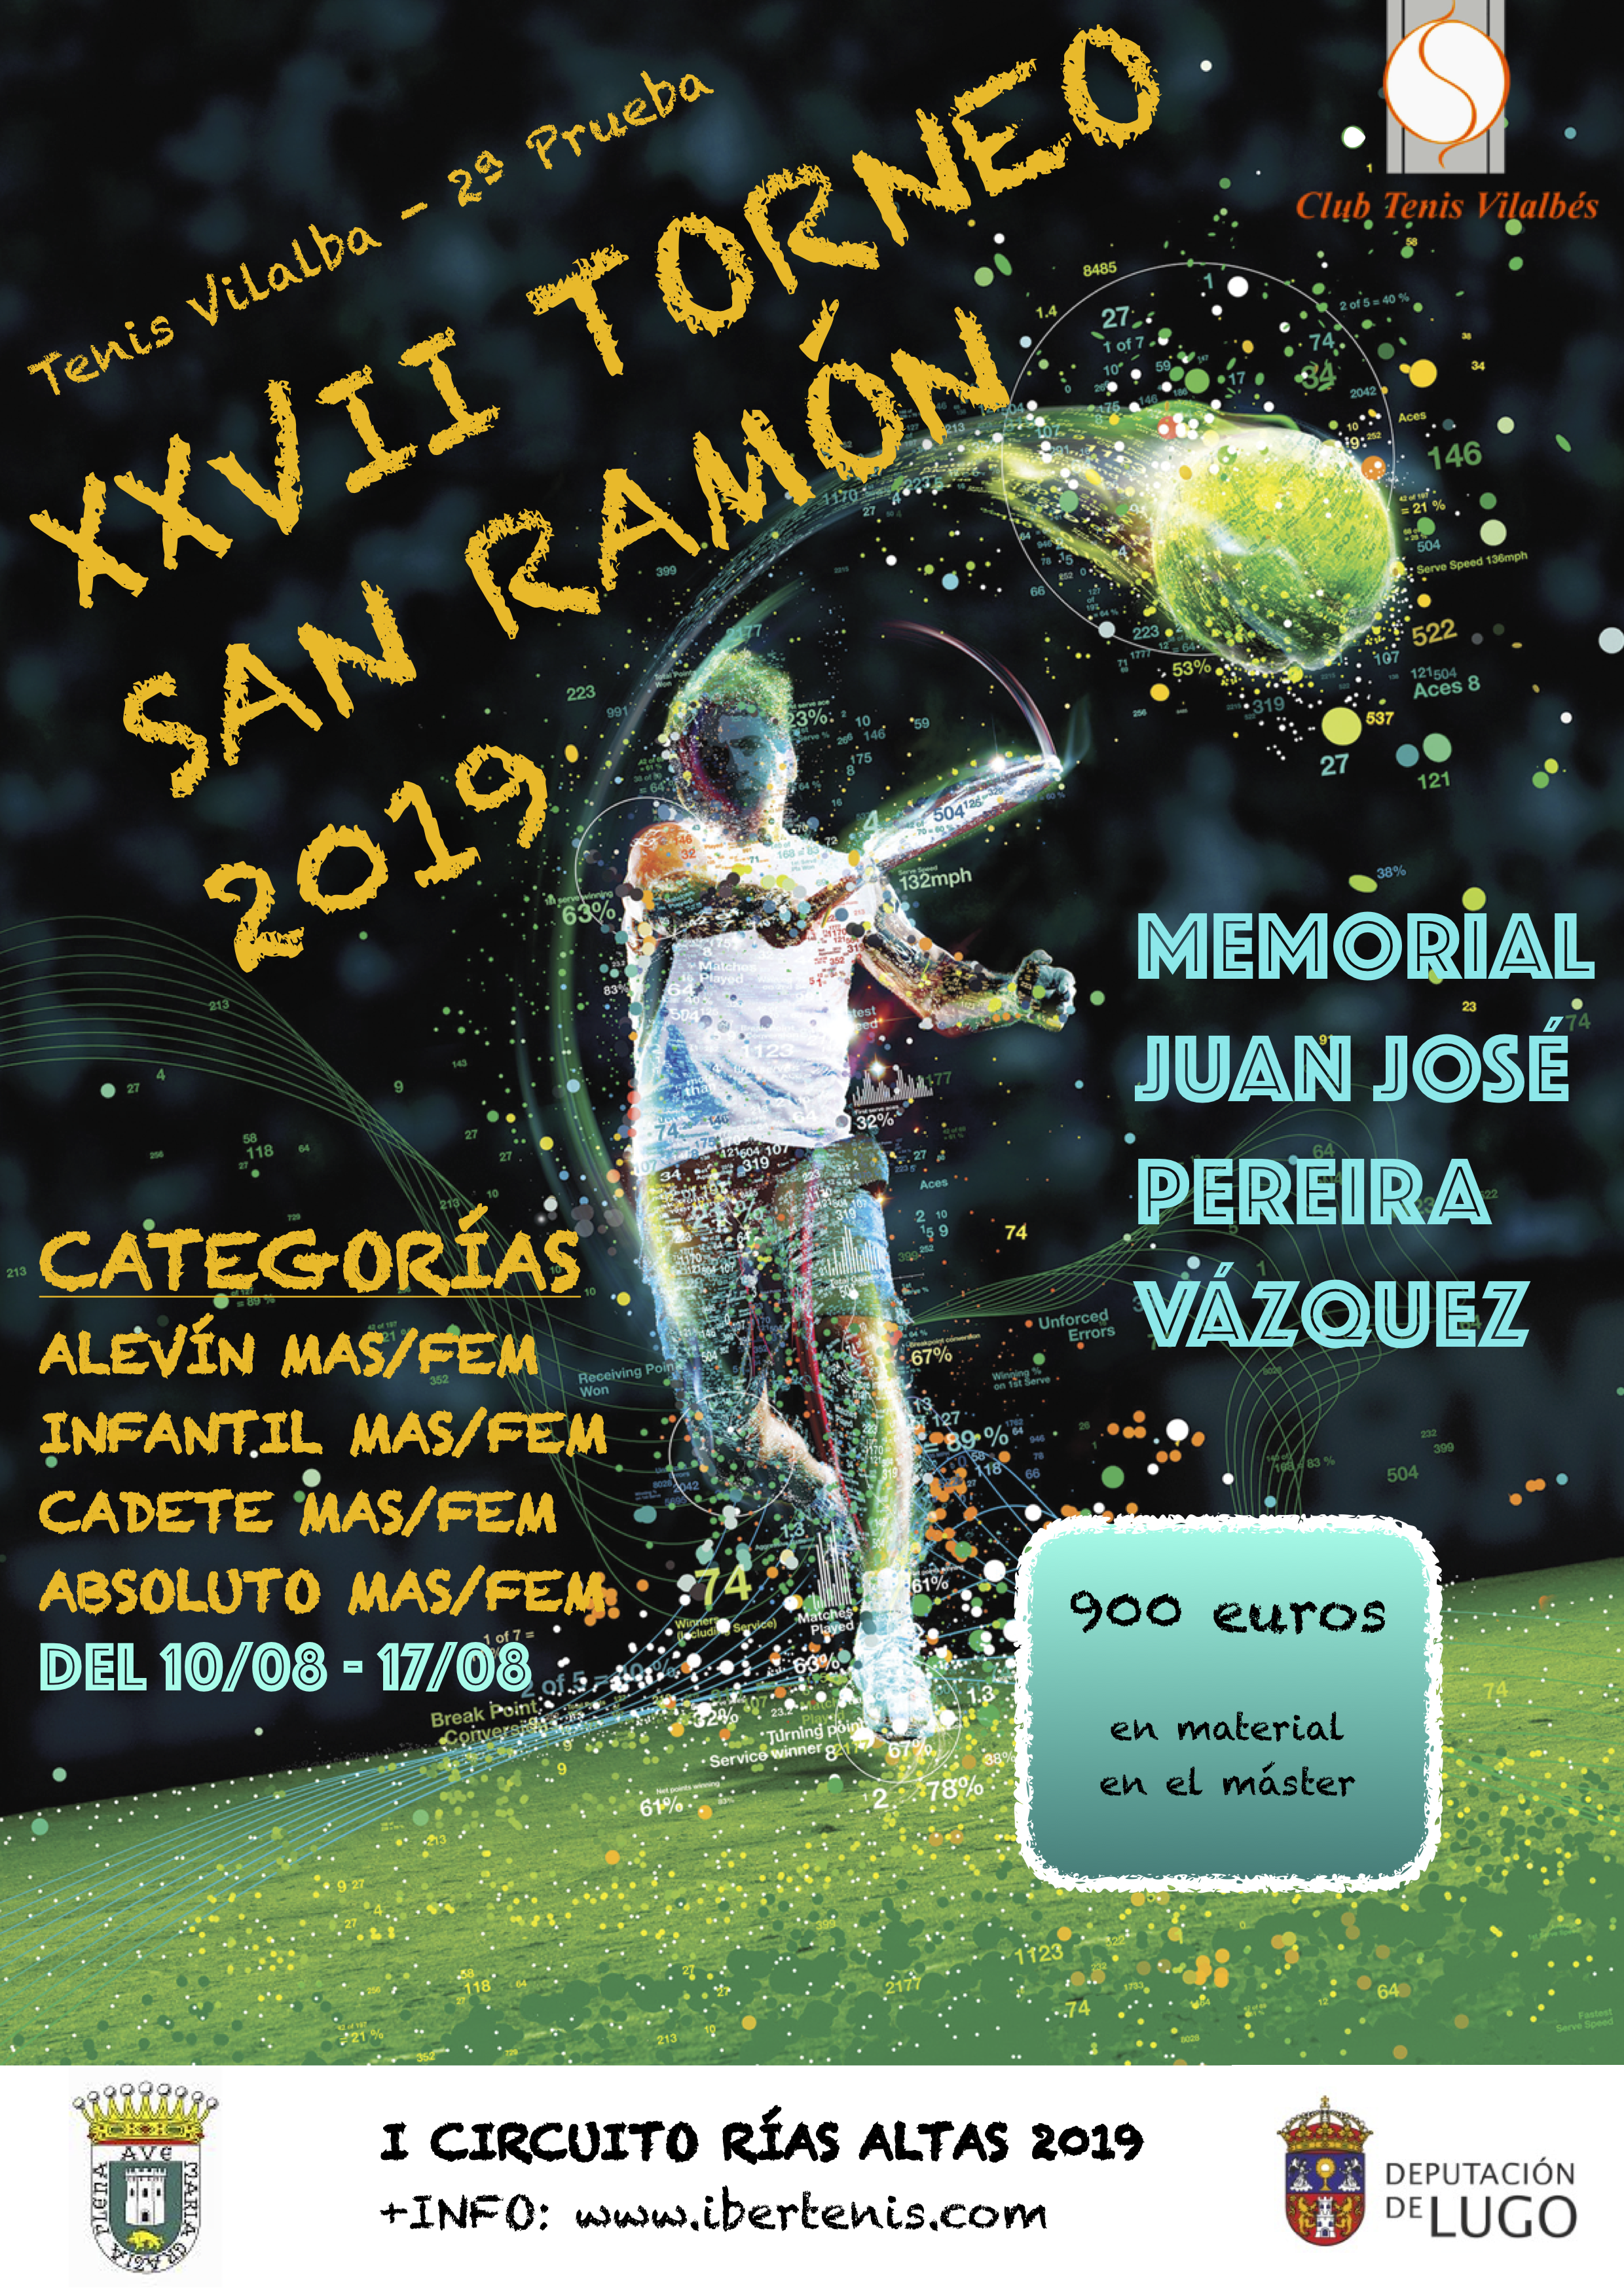 Cartel del XXVII TORNEO SAN RAMON 2019 (Memorial Juan J. Pereira Vazquez) / 2ª PROBA del I CIRCUITO RIAS ALTAS